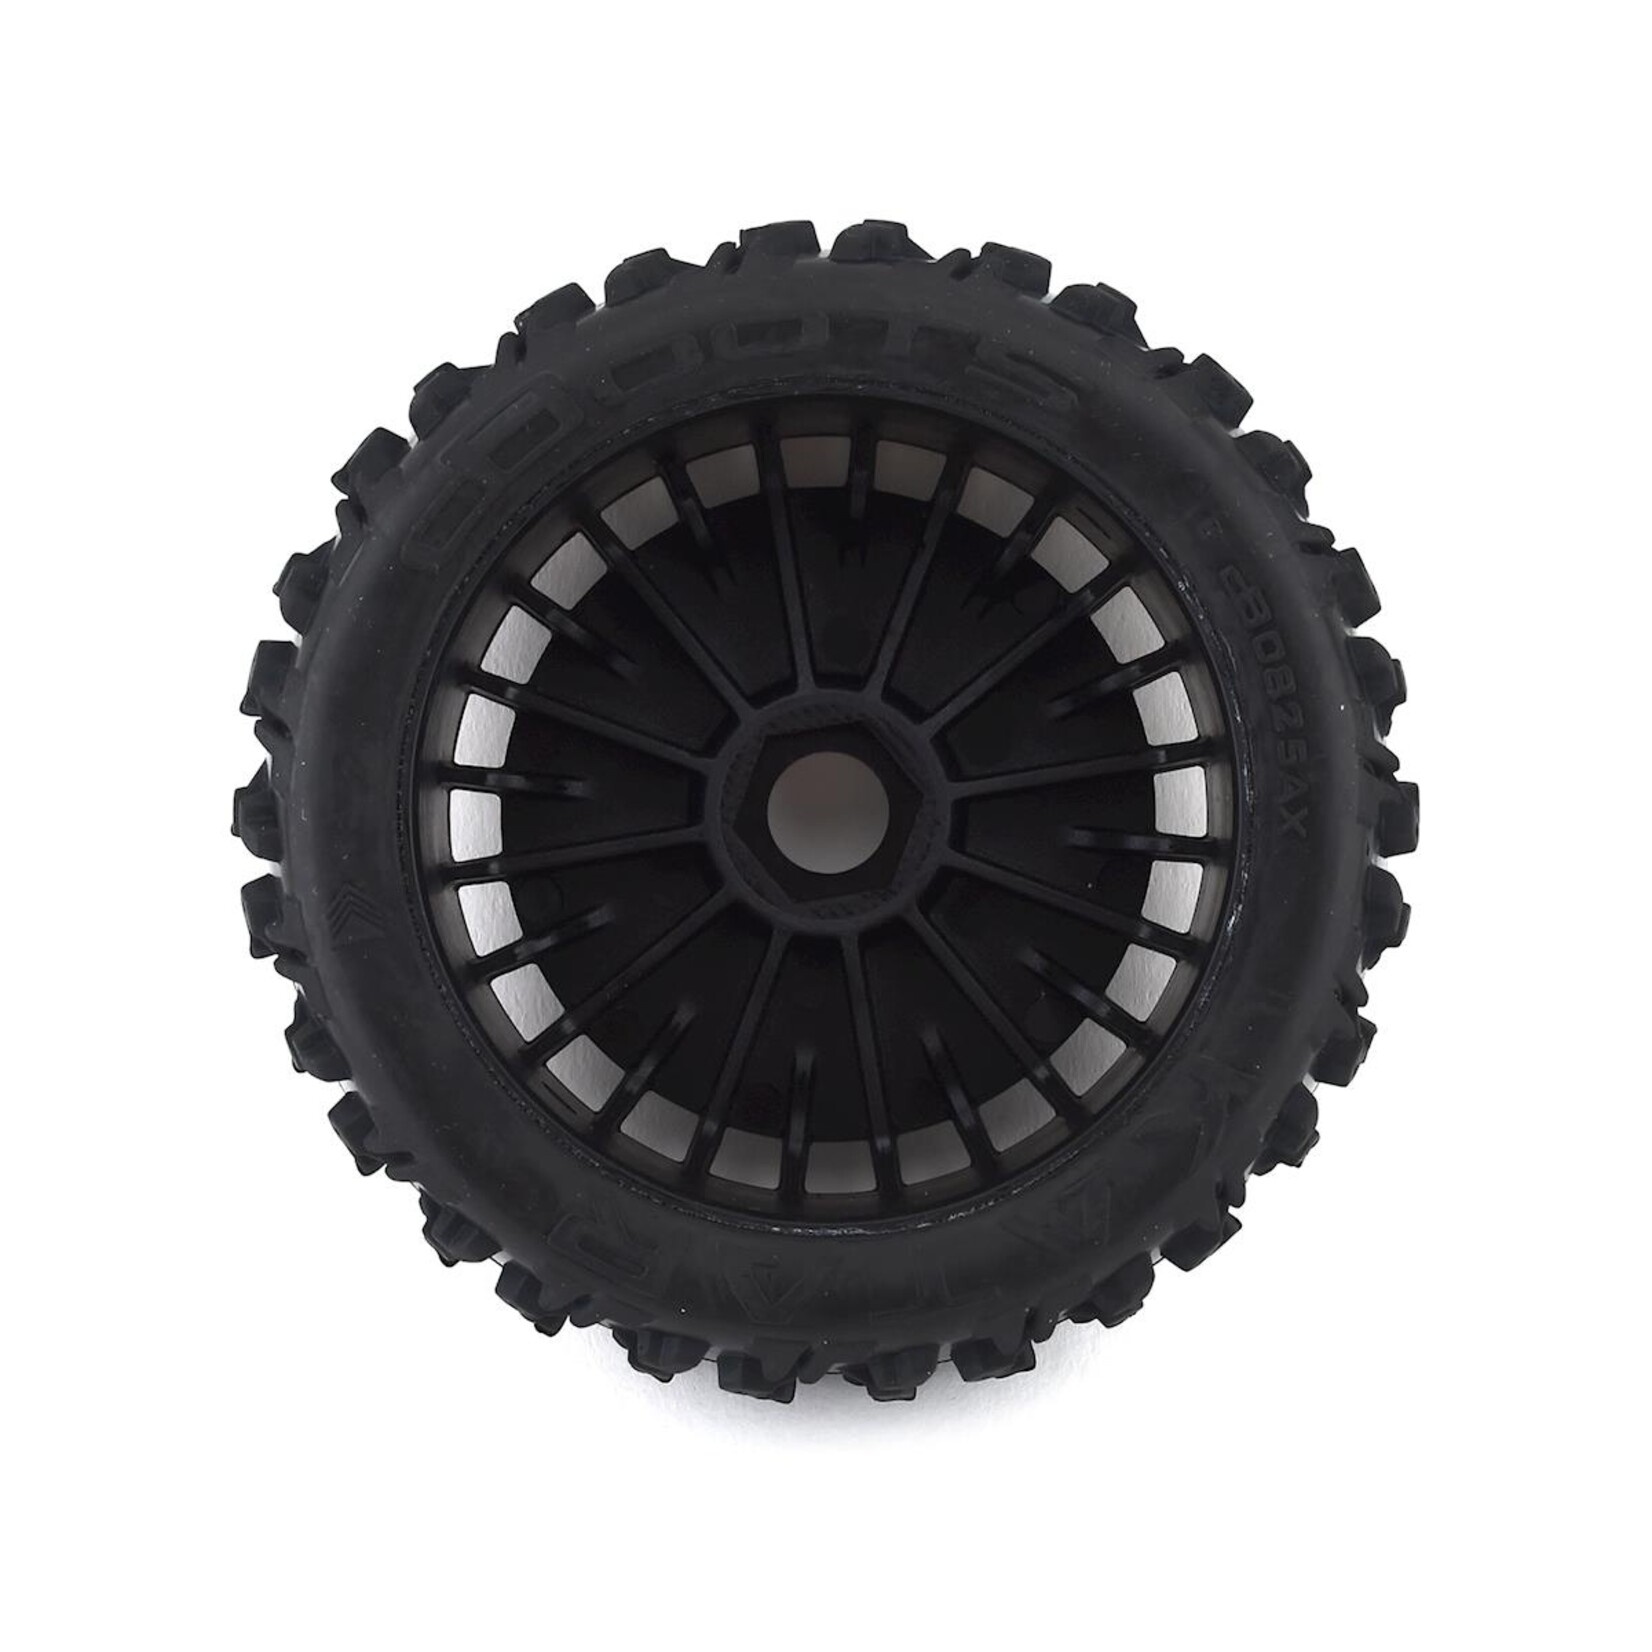 ARRMA Arrma Pre-Mounted dBoots Katar B 6S Tire/Wheel Set (Black) (2) #ARA550058